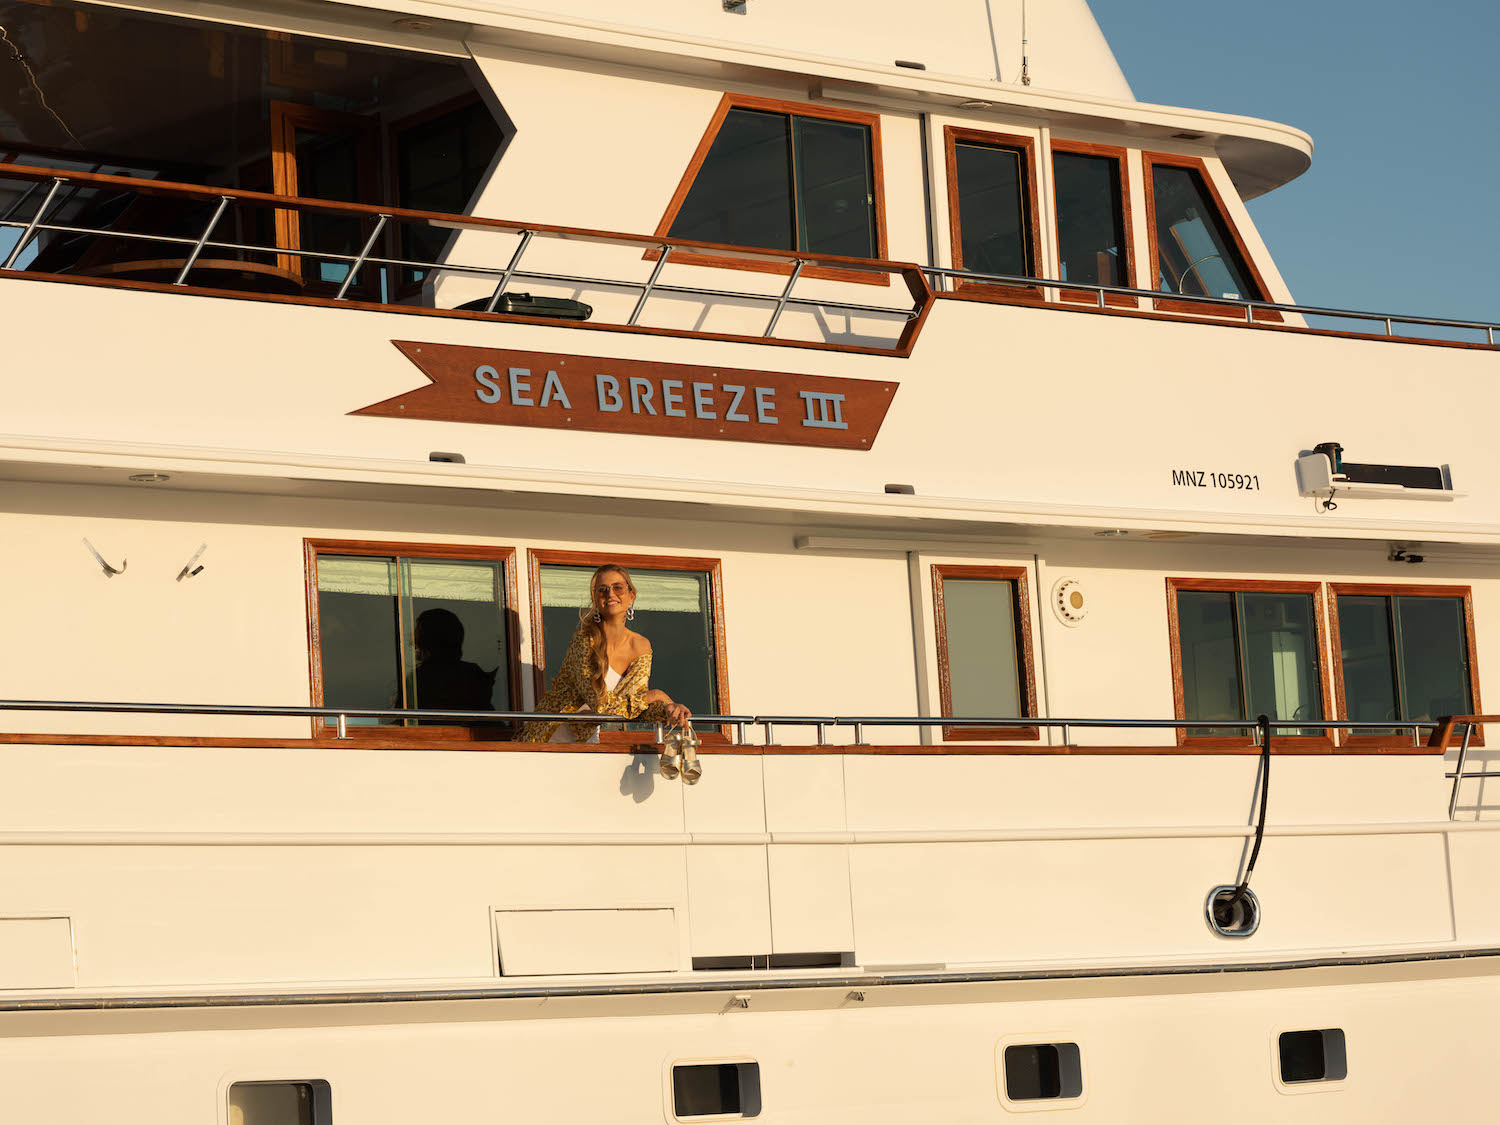 SEA BREEZE III With Model On Side Deck